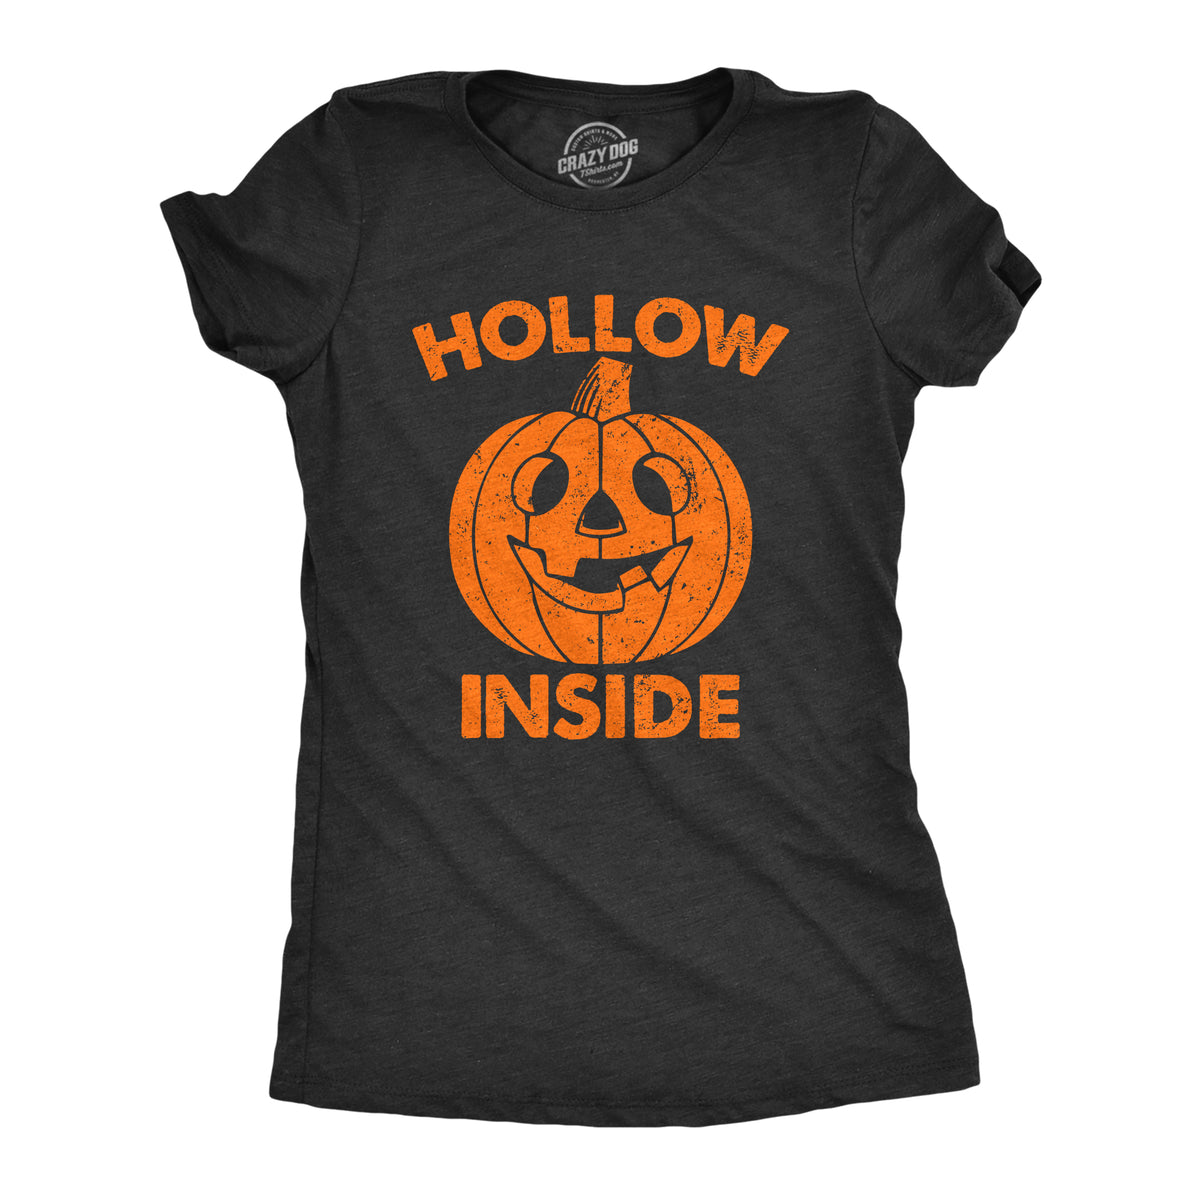 Funny Heather Black - HOLLOW Hollow Inside Womens T Shirt Nerdy Halloween sarcastic Tee